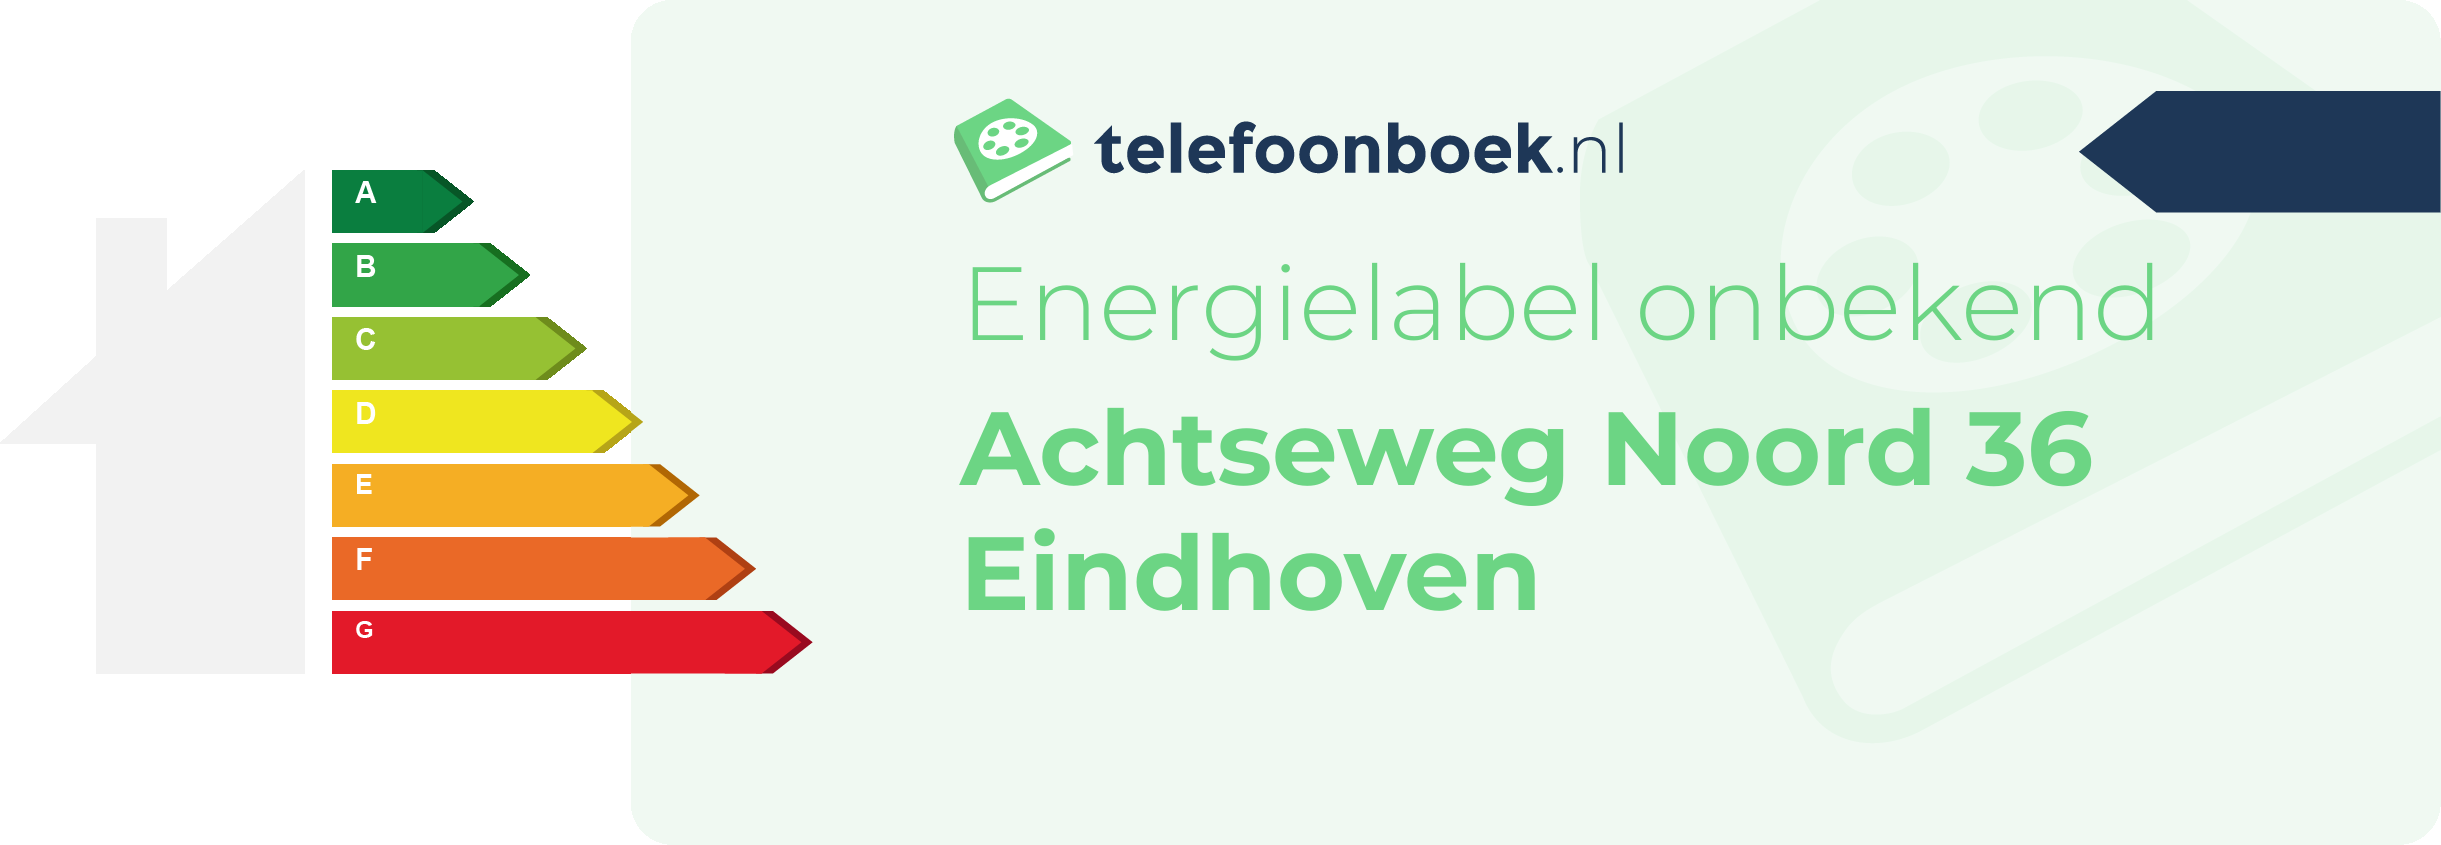 Energielabel Achtseweg Noord 36 Eindhoven